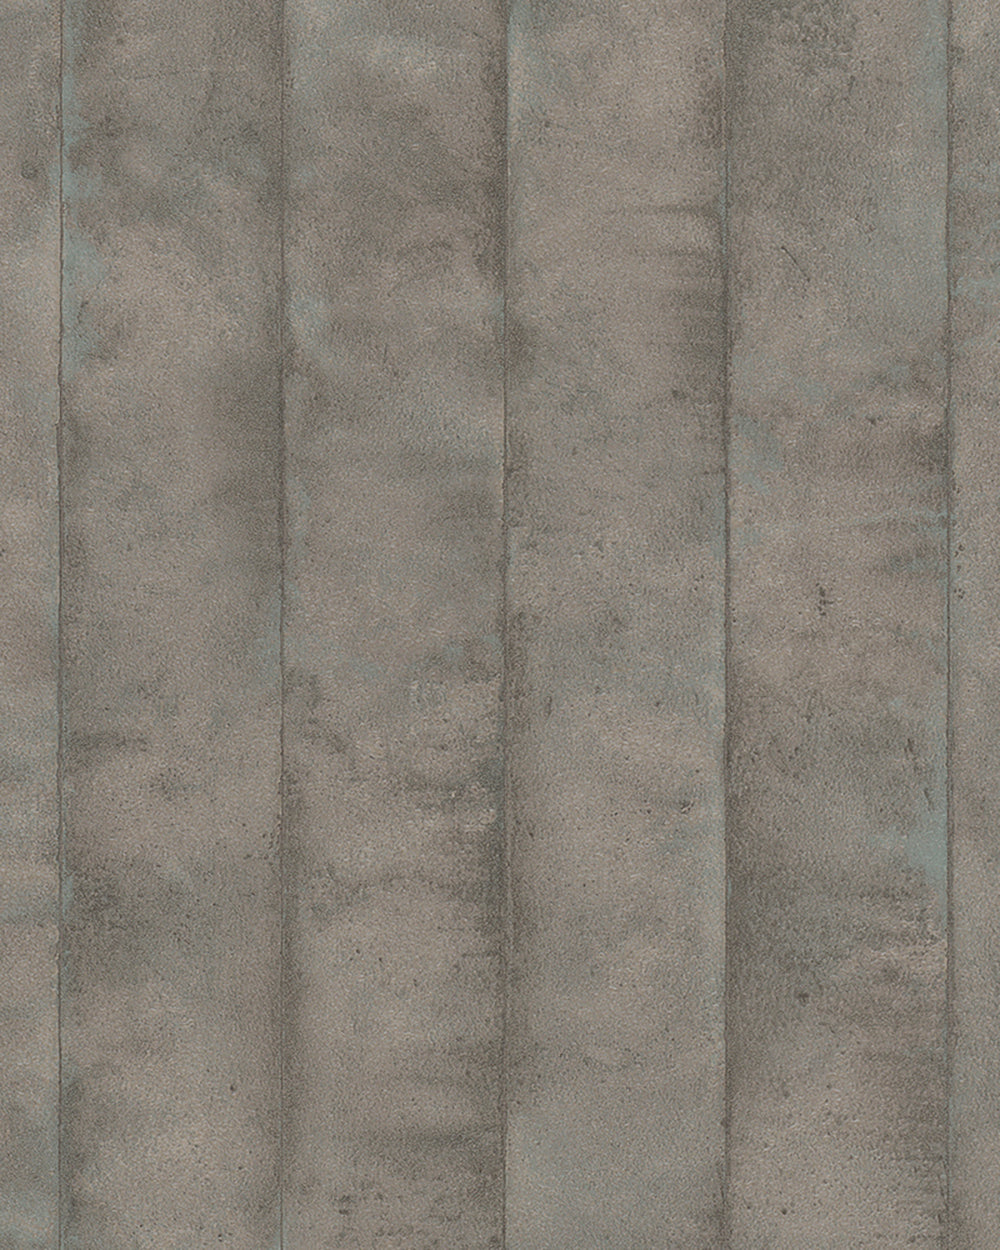 Avalon - Textured Concrete Panels industrial wallpaper Marburg Roll Dark Taupe  31614